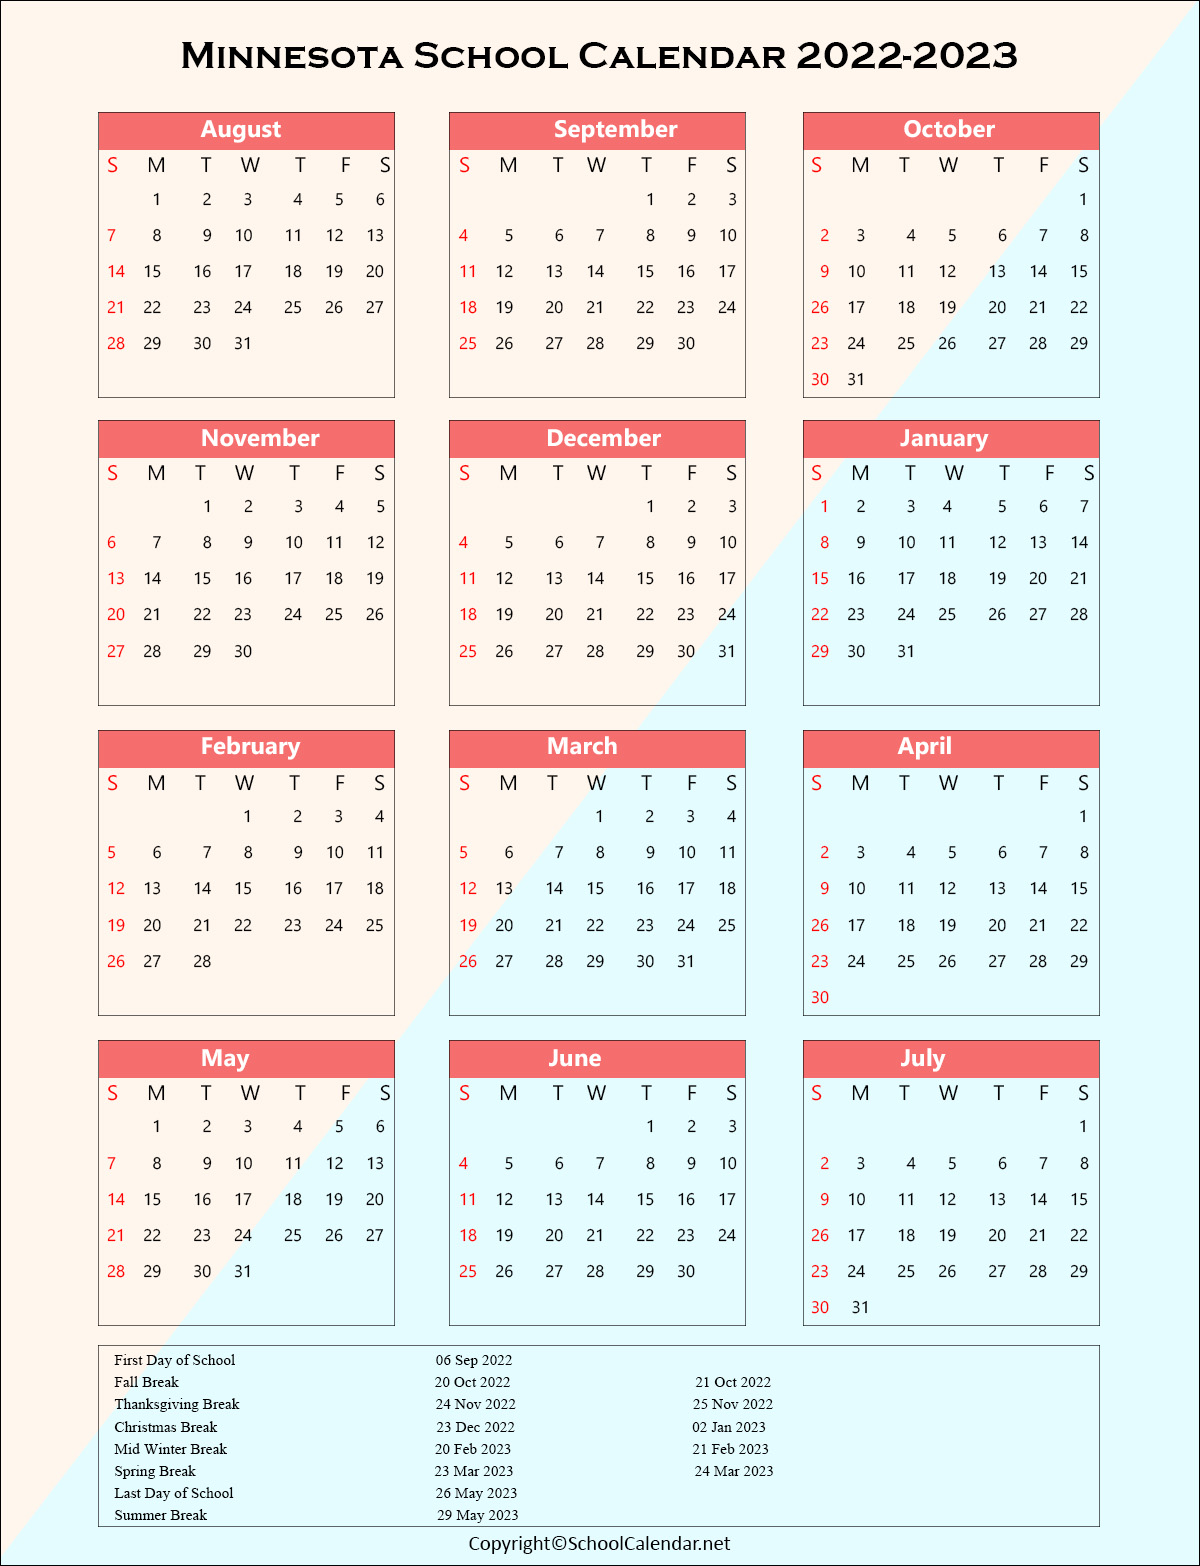 Minnesota School Holiday Calendar 2022